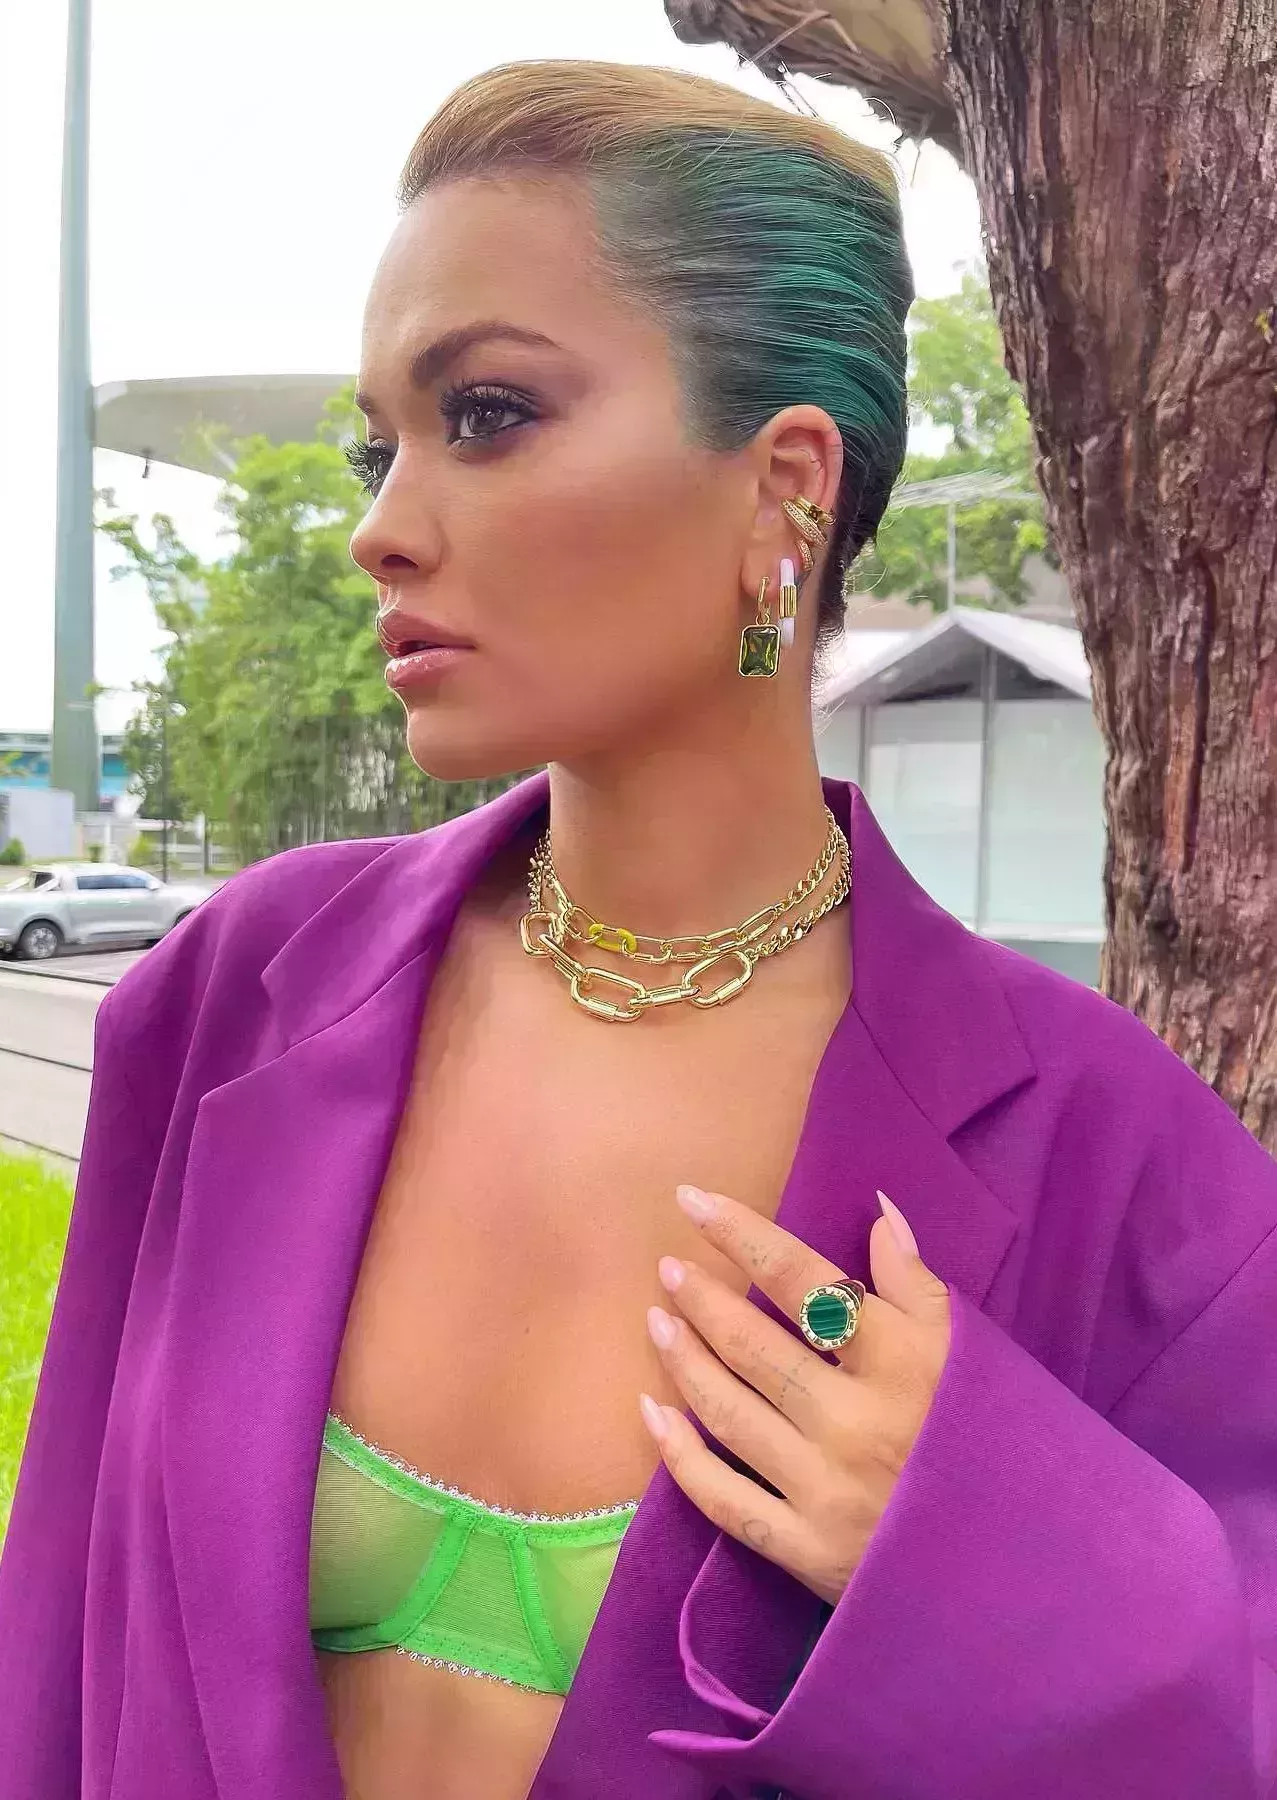 Rita Ora’s Temporary Sea Green Peekaboo Hair